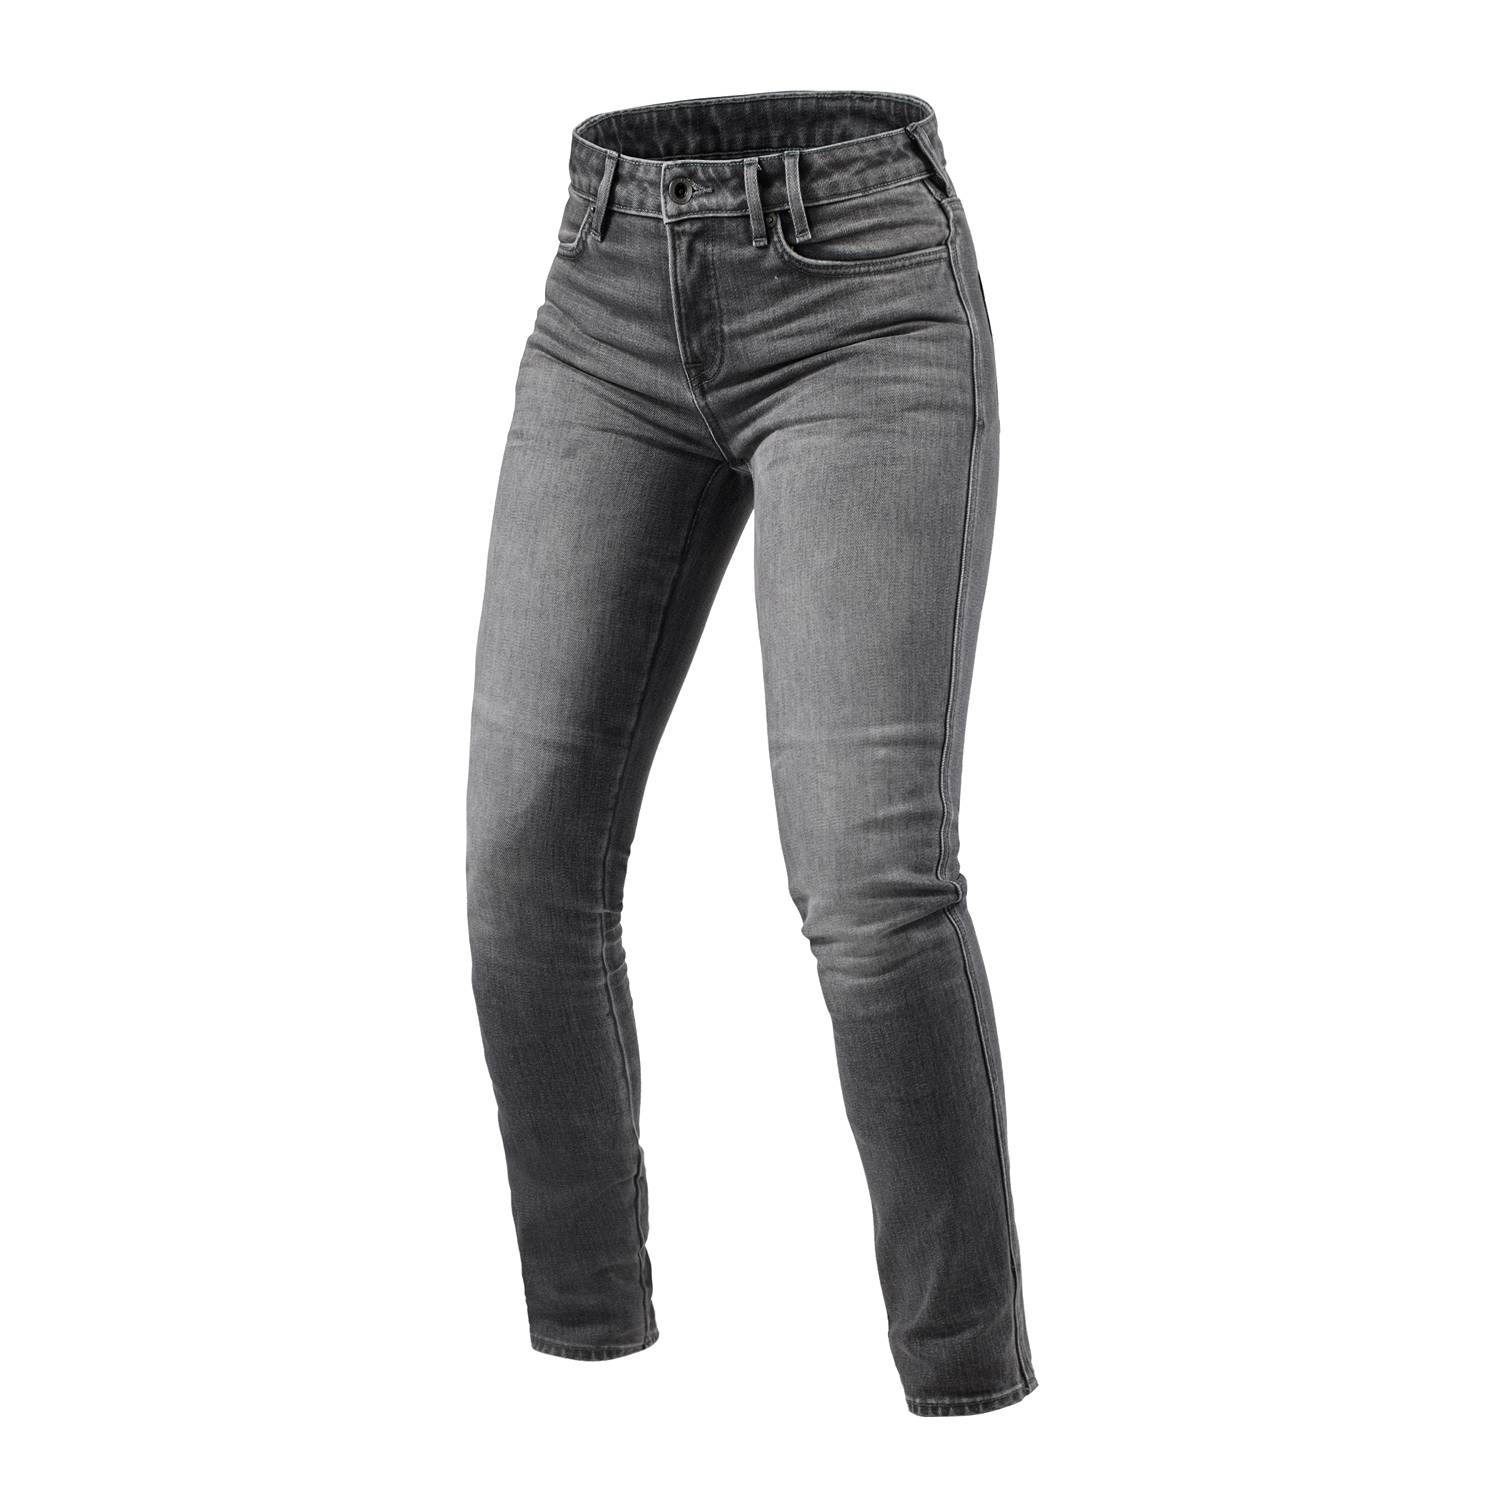 Image of REV'IT! Jeans Shelby 2 Ladies SK Medium Grey Stone L30 Talla L30/W29